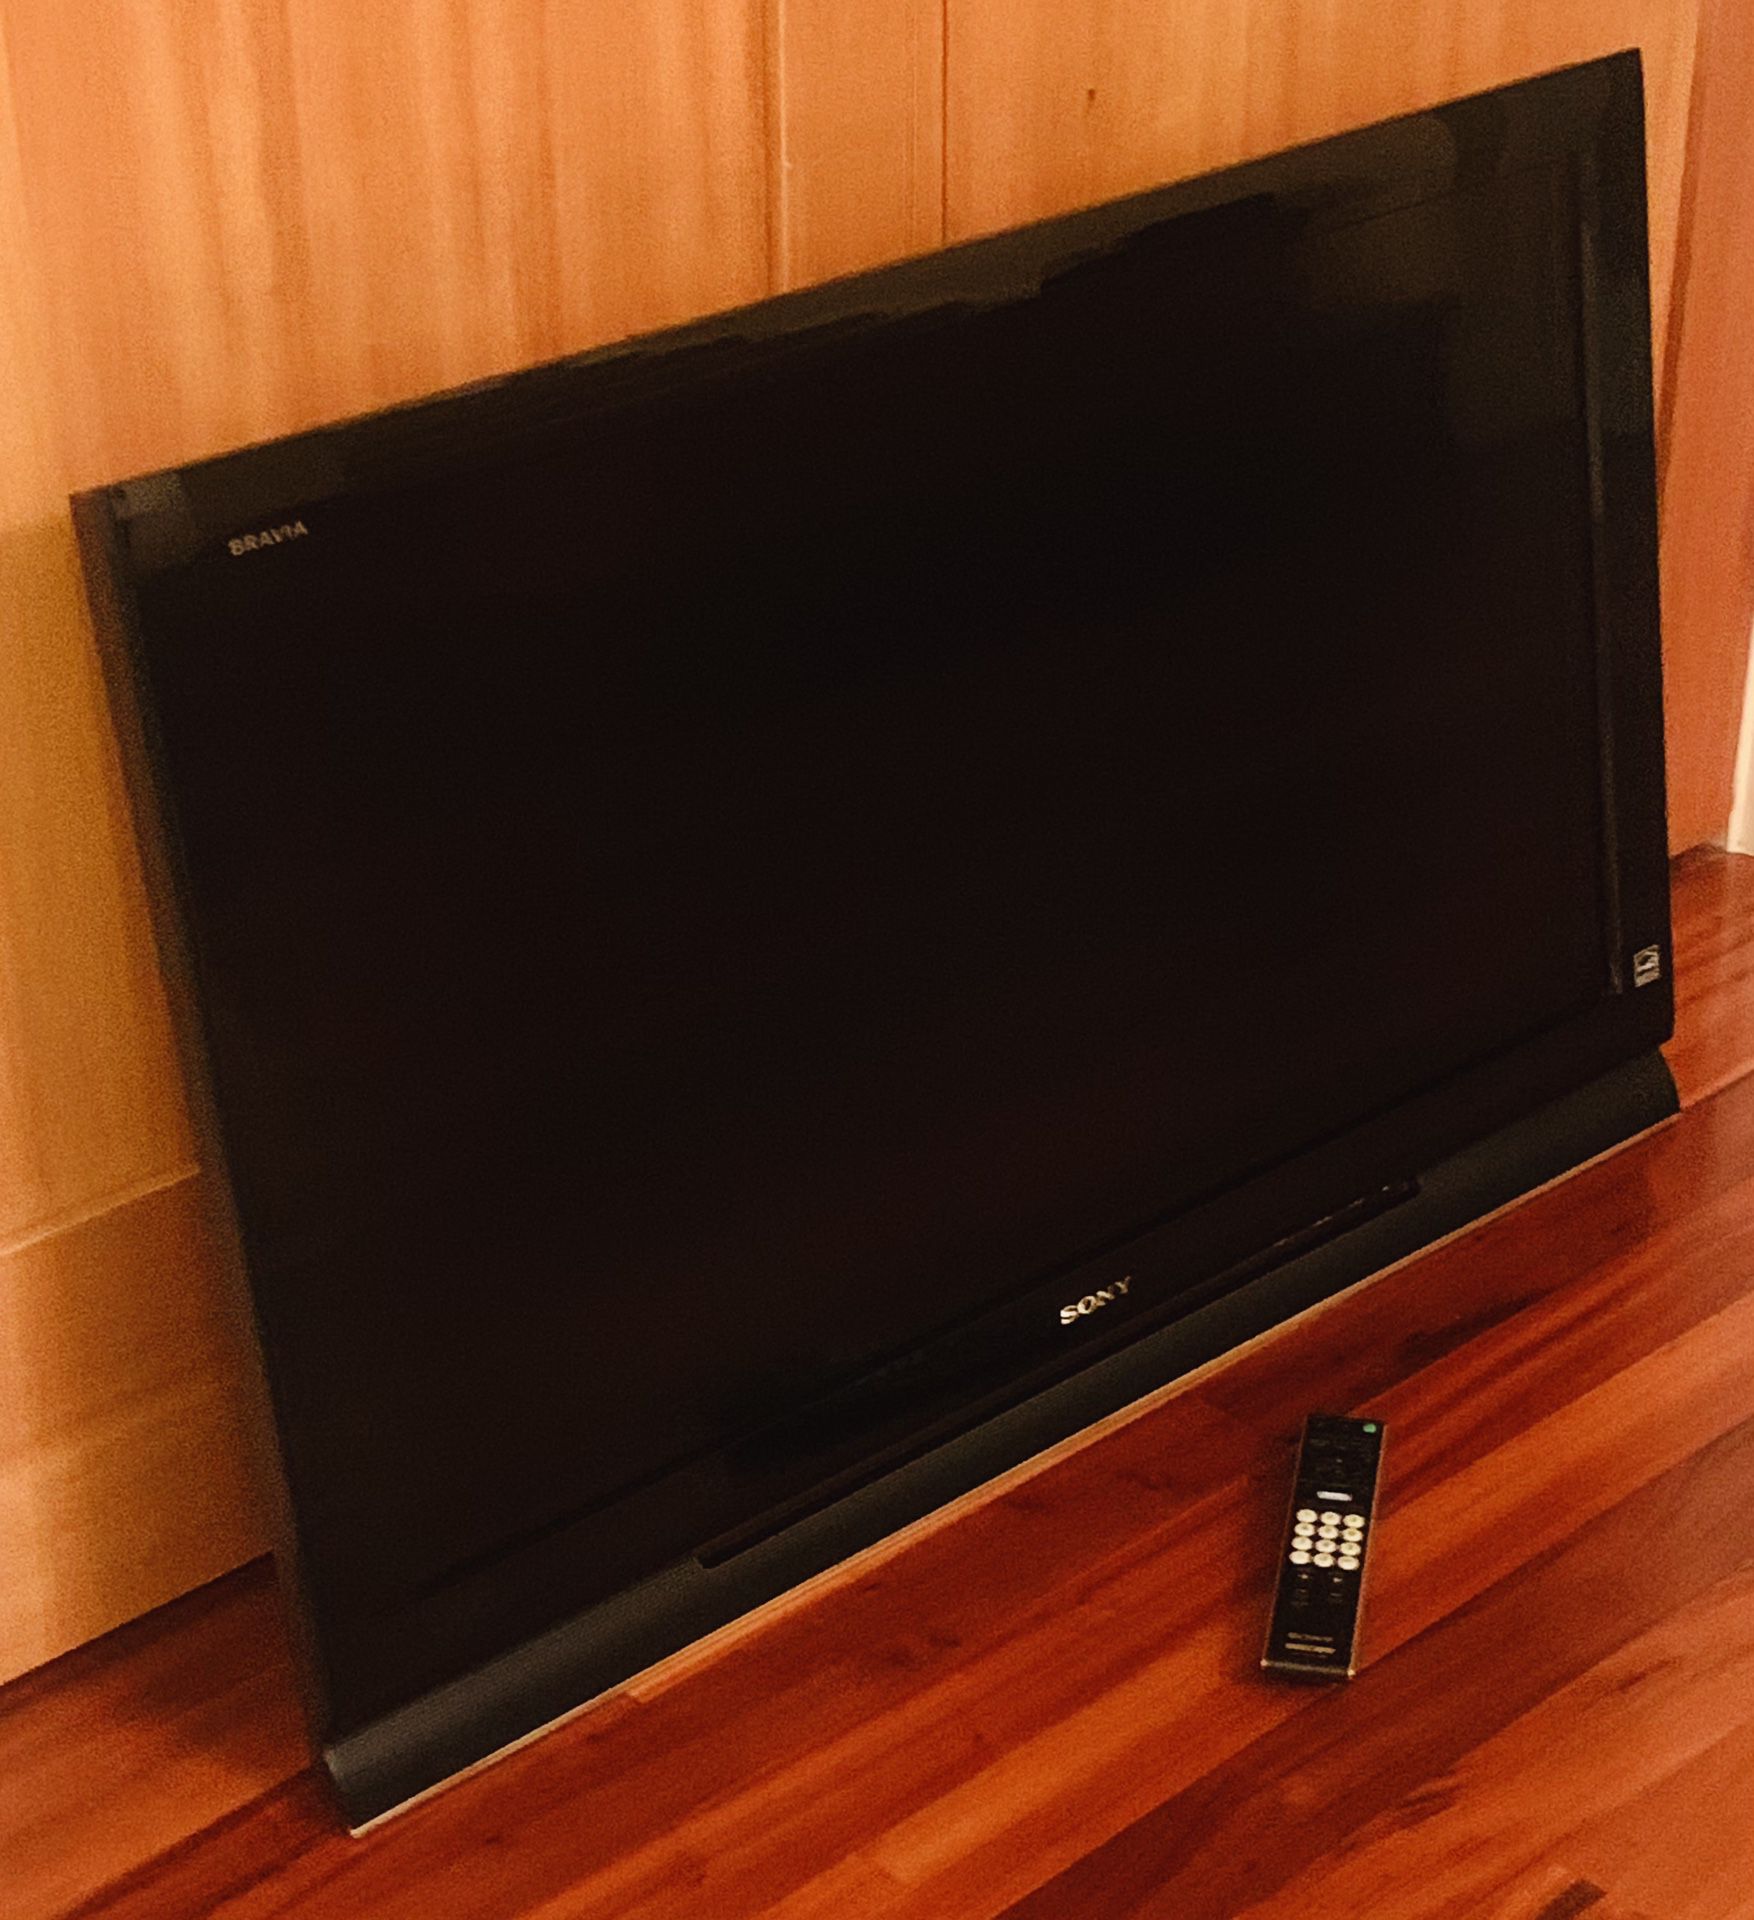 40” Sony Bravia | Full 1080p LCD HD TV | 2008 Model | Good Condition